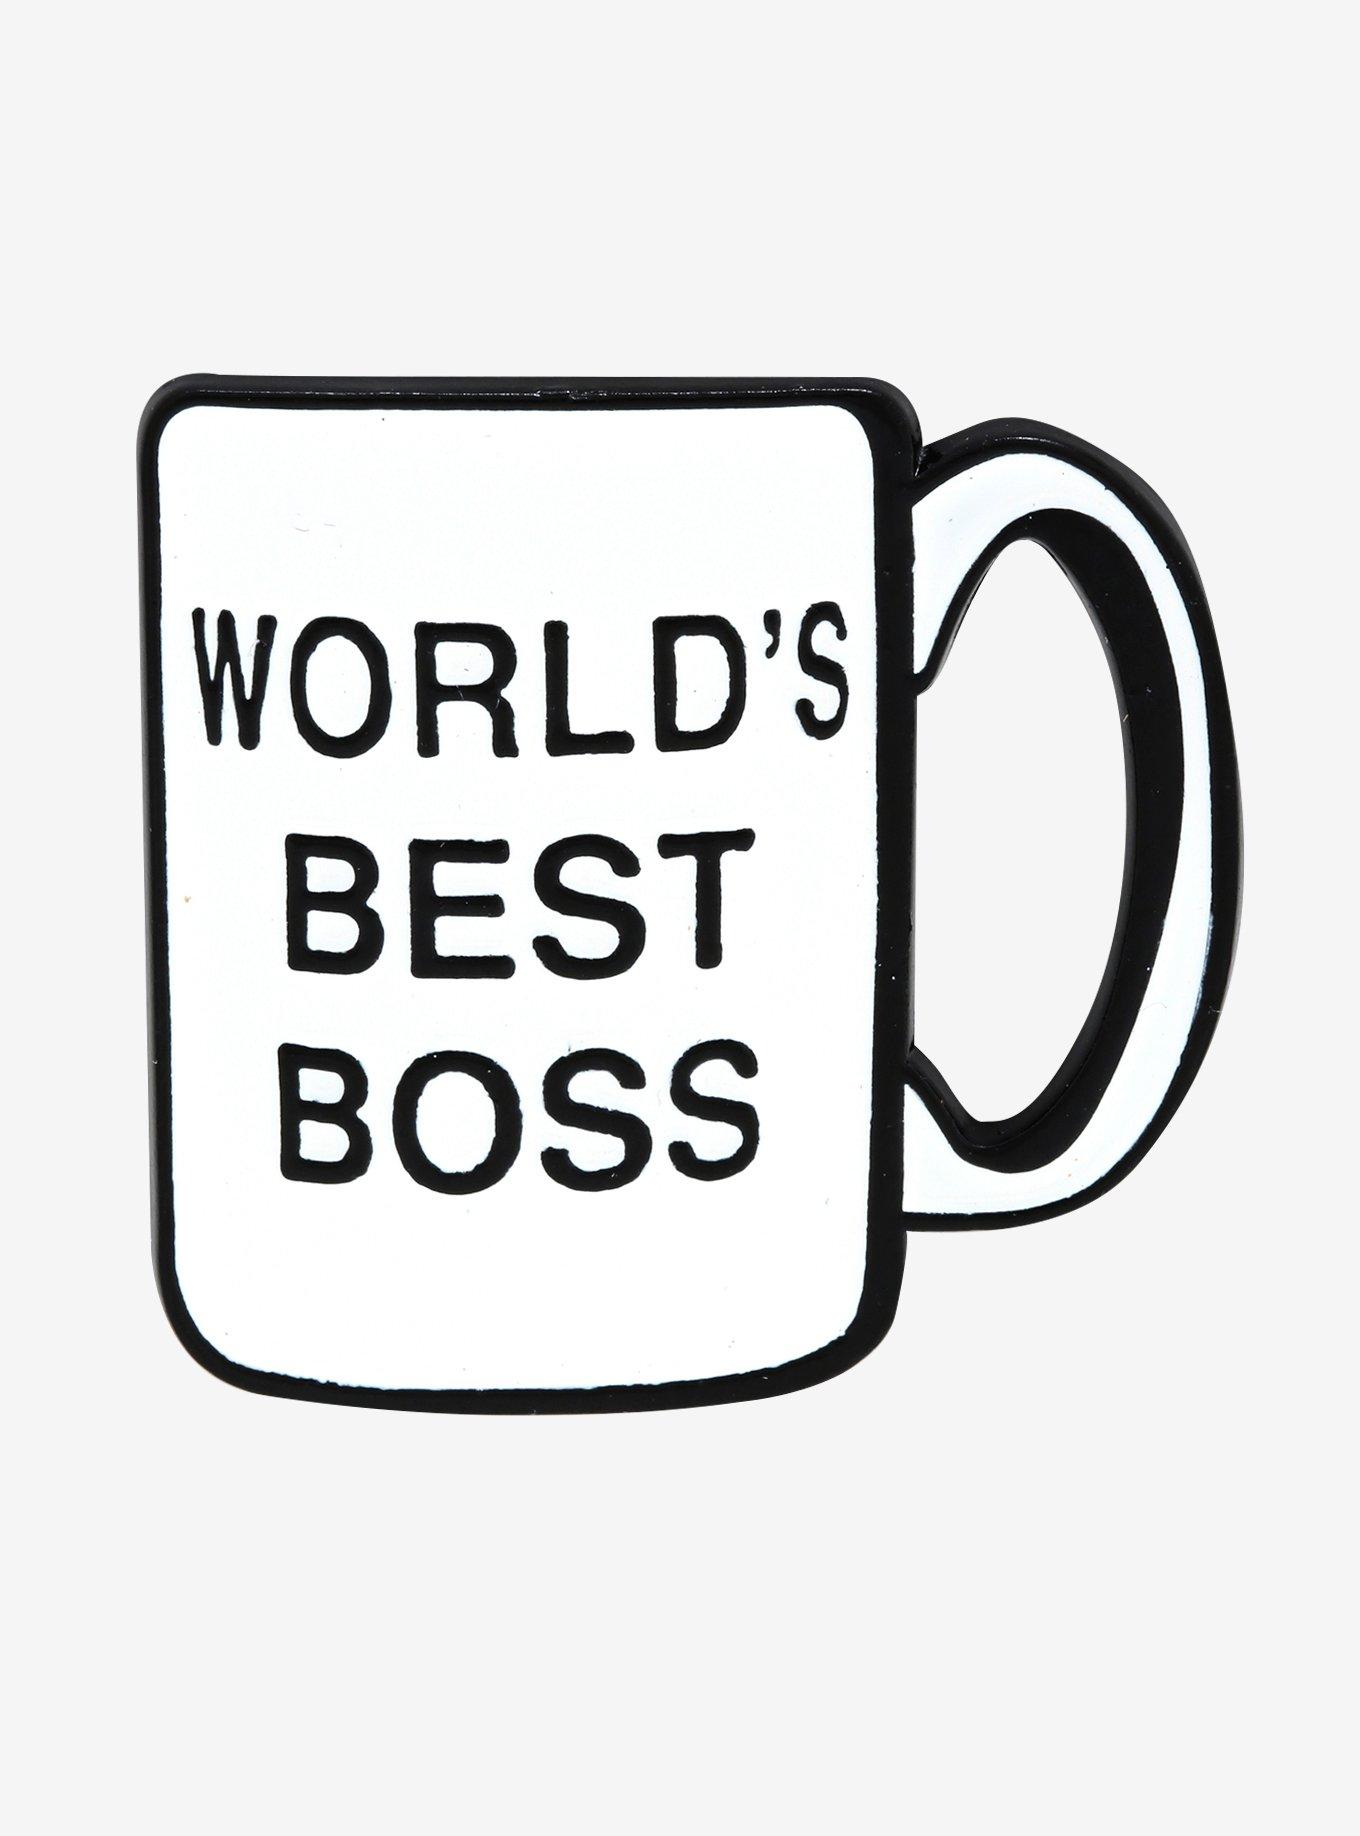 The Office World's Best Boss Enamel Pin, , hi-res